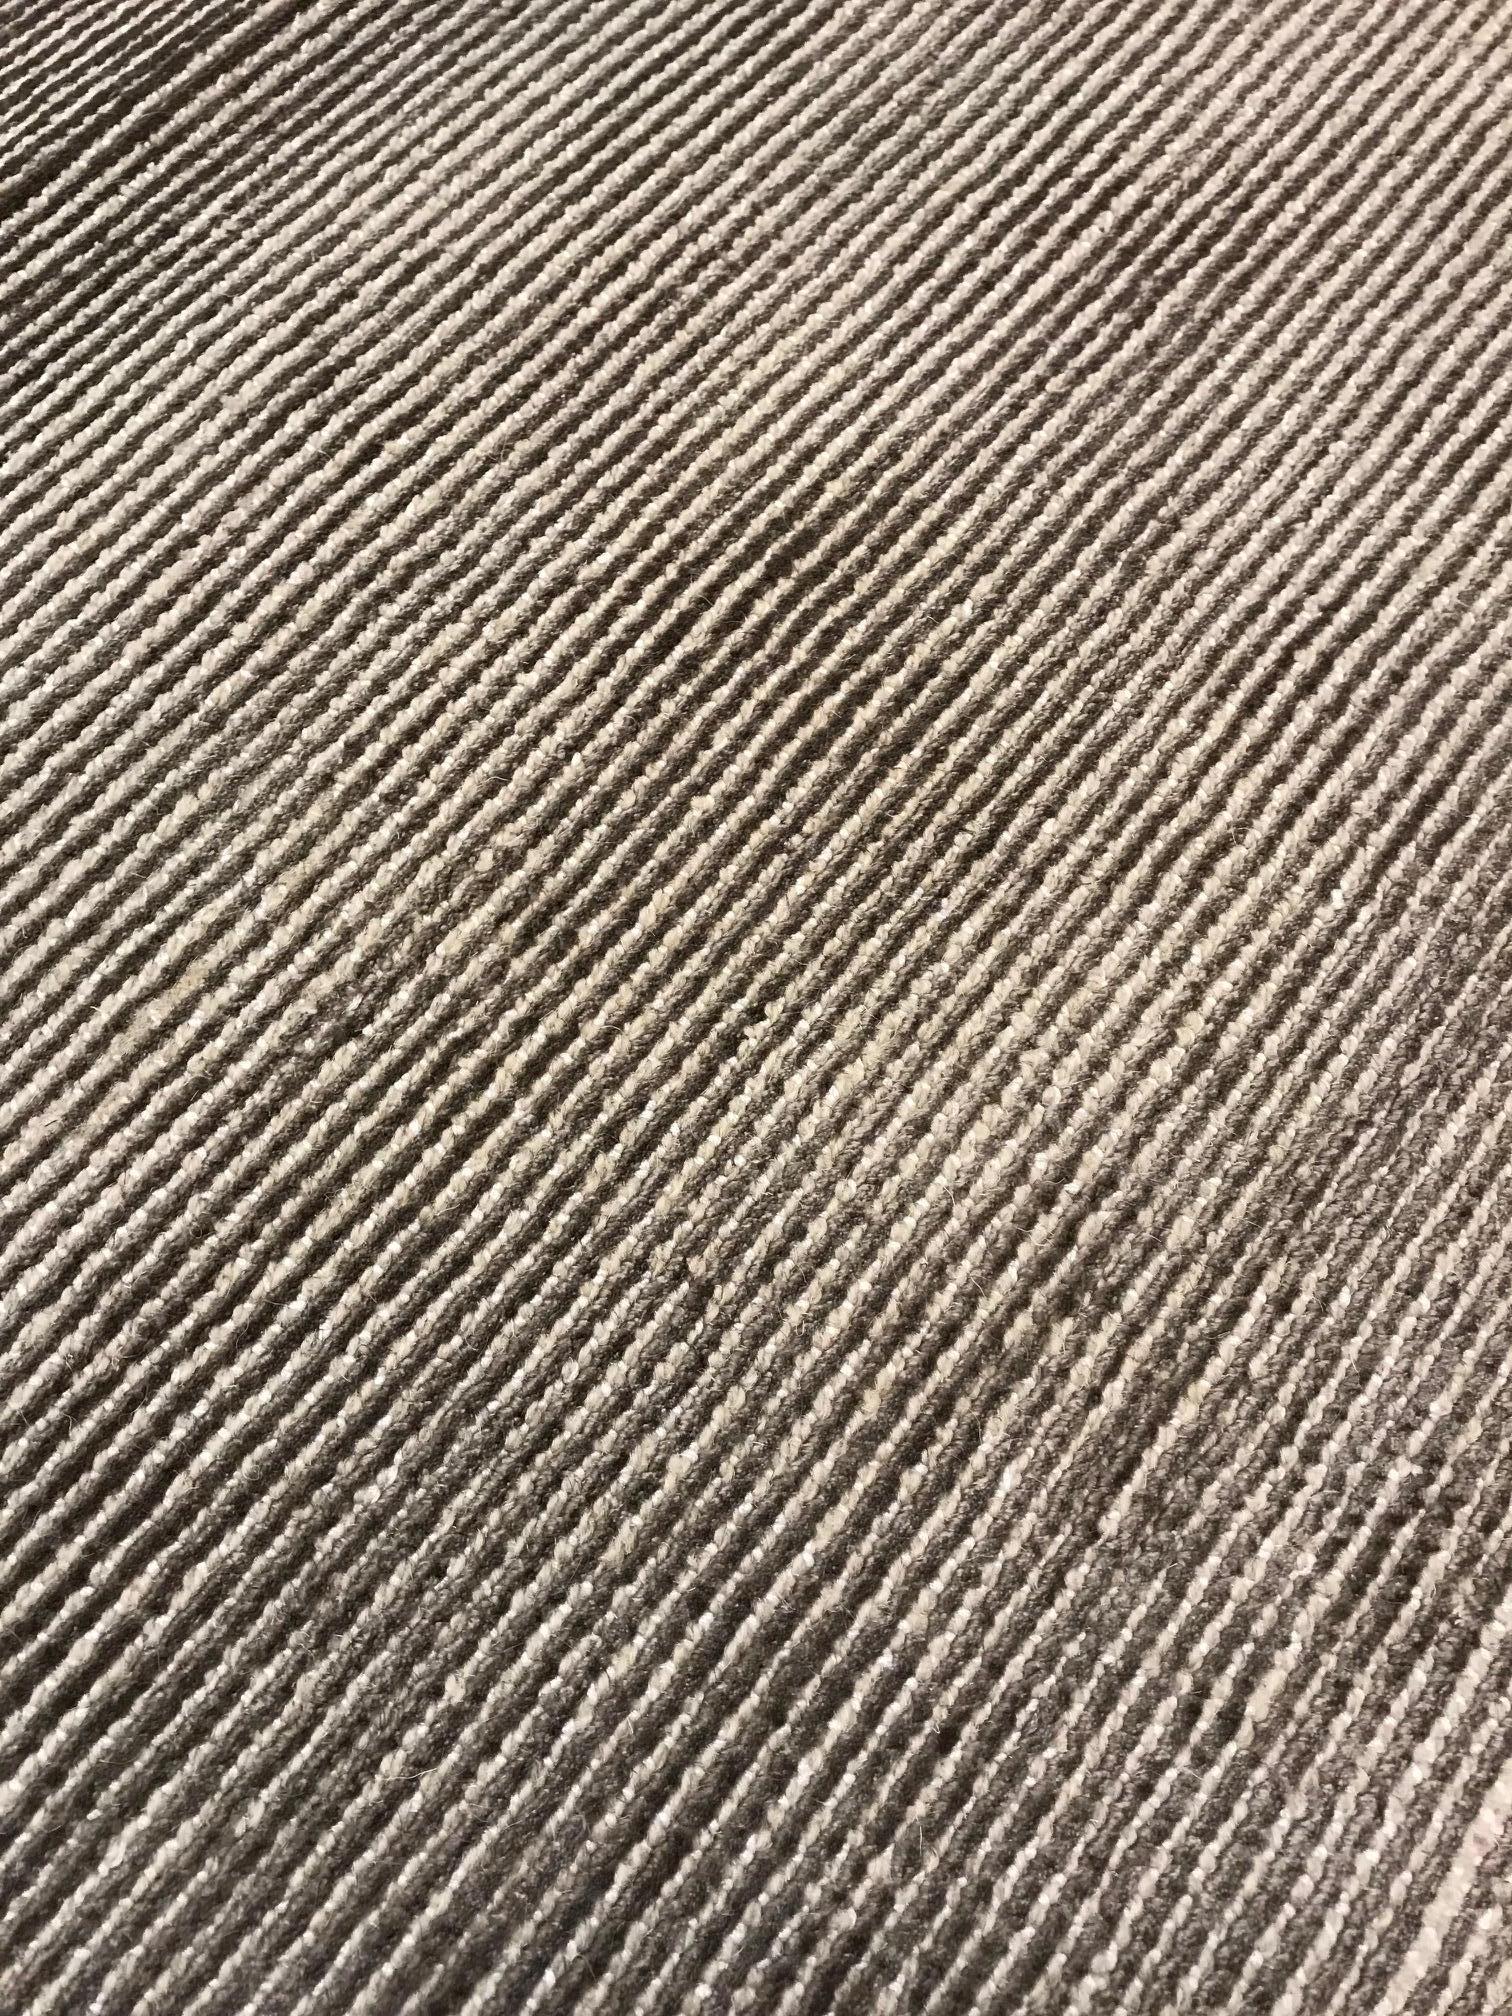 Modern Taupe rug in wool and silk by Doris Leslie Blau.
Size: 10'0